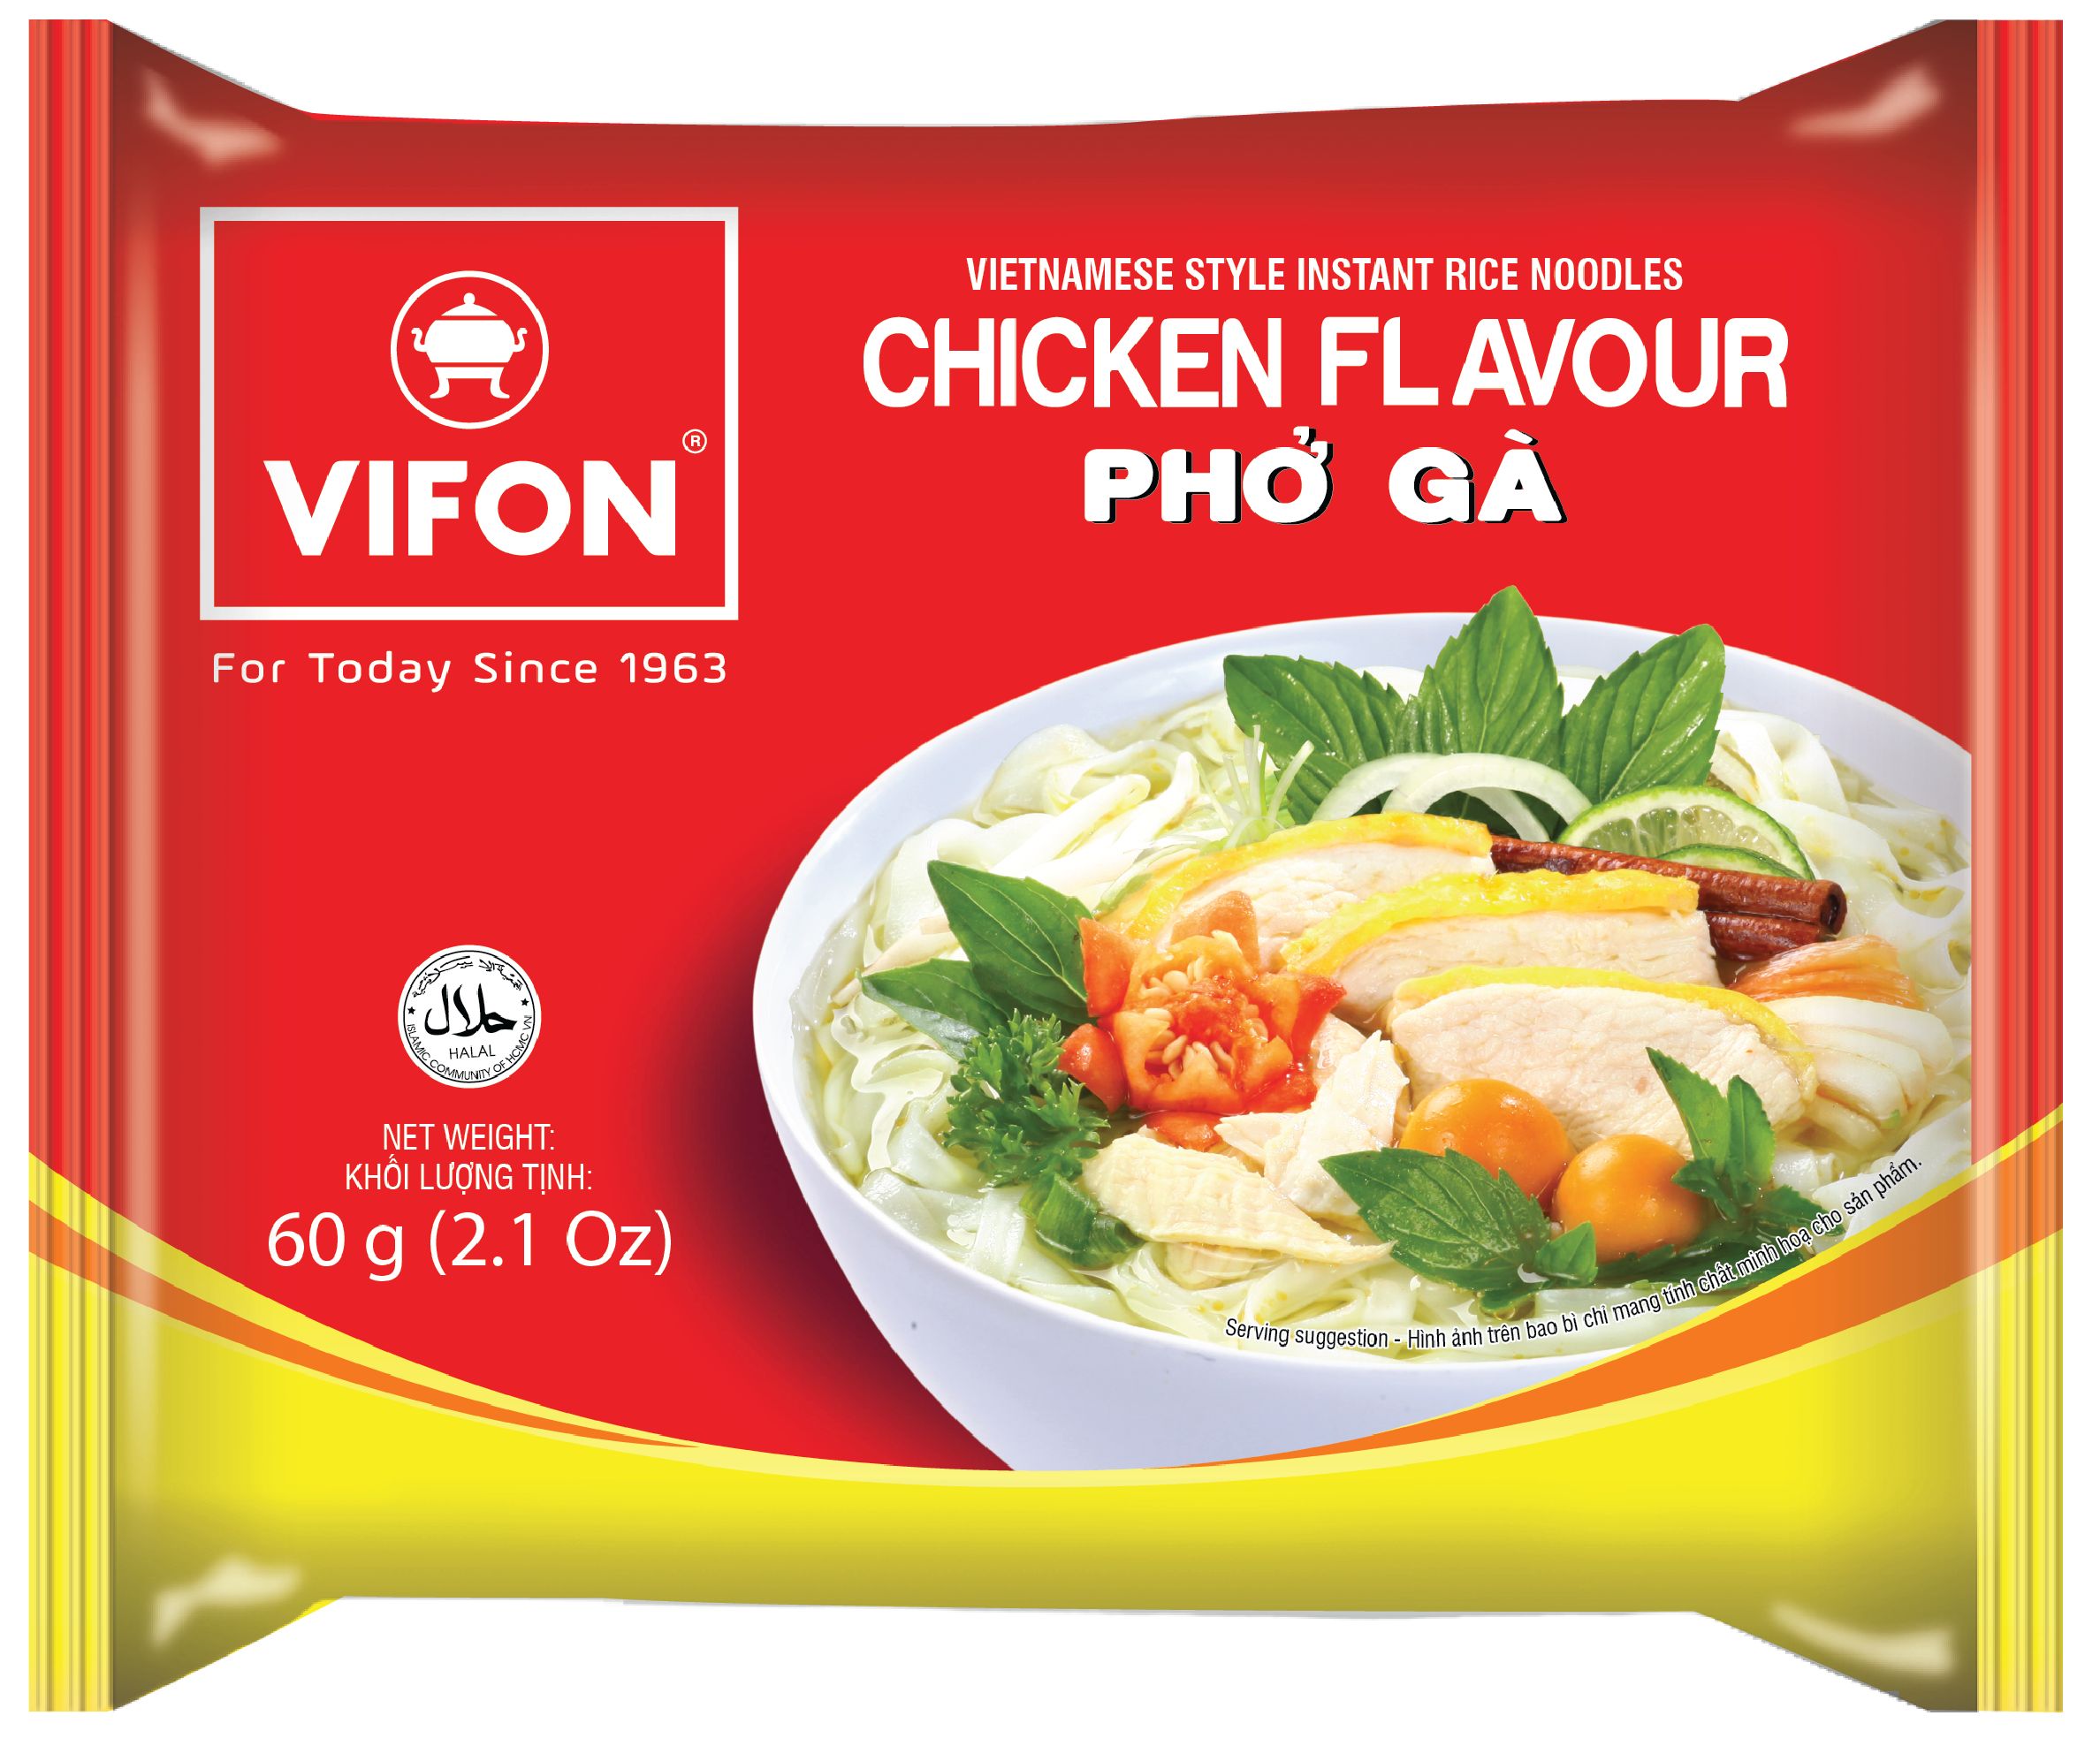 Vifon лапша. Лапша Vifon pho. Лапша рисовая Vifon pho ga. ФО га с курицей Vifon 60гр. Vifon лапша Chicken Flavour.